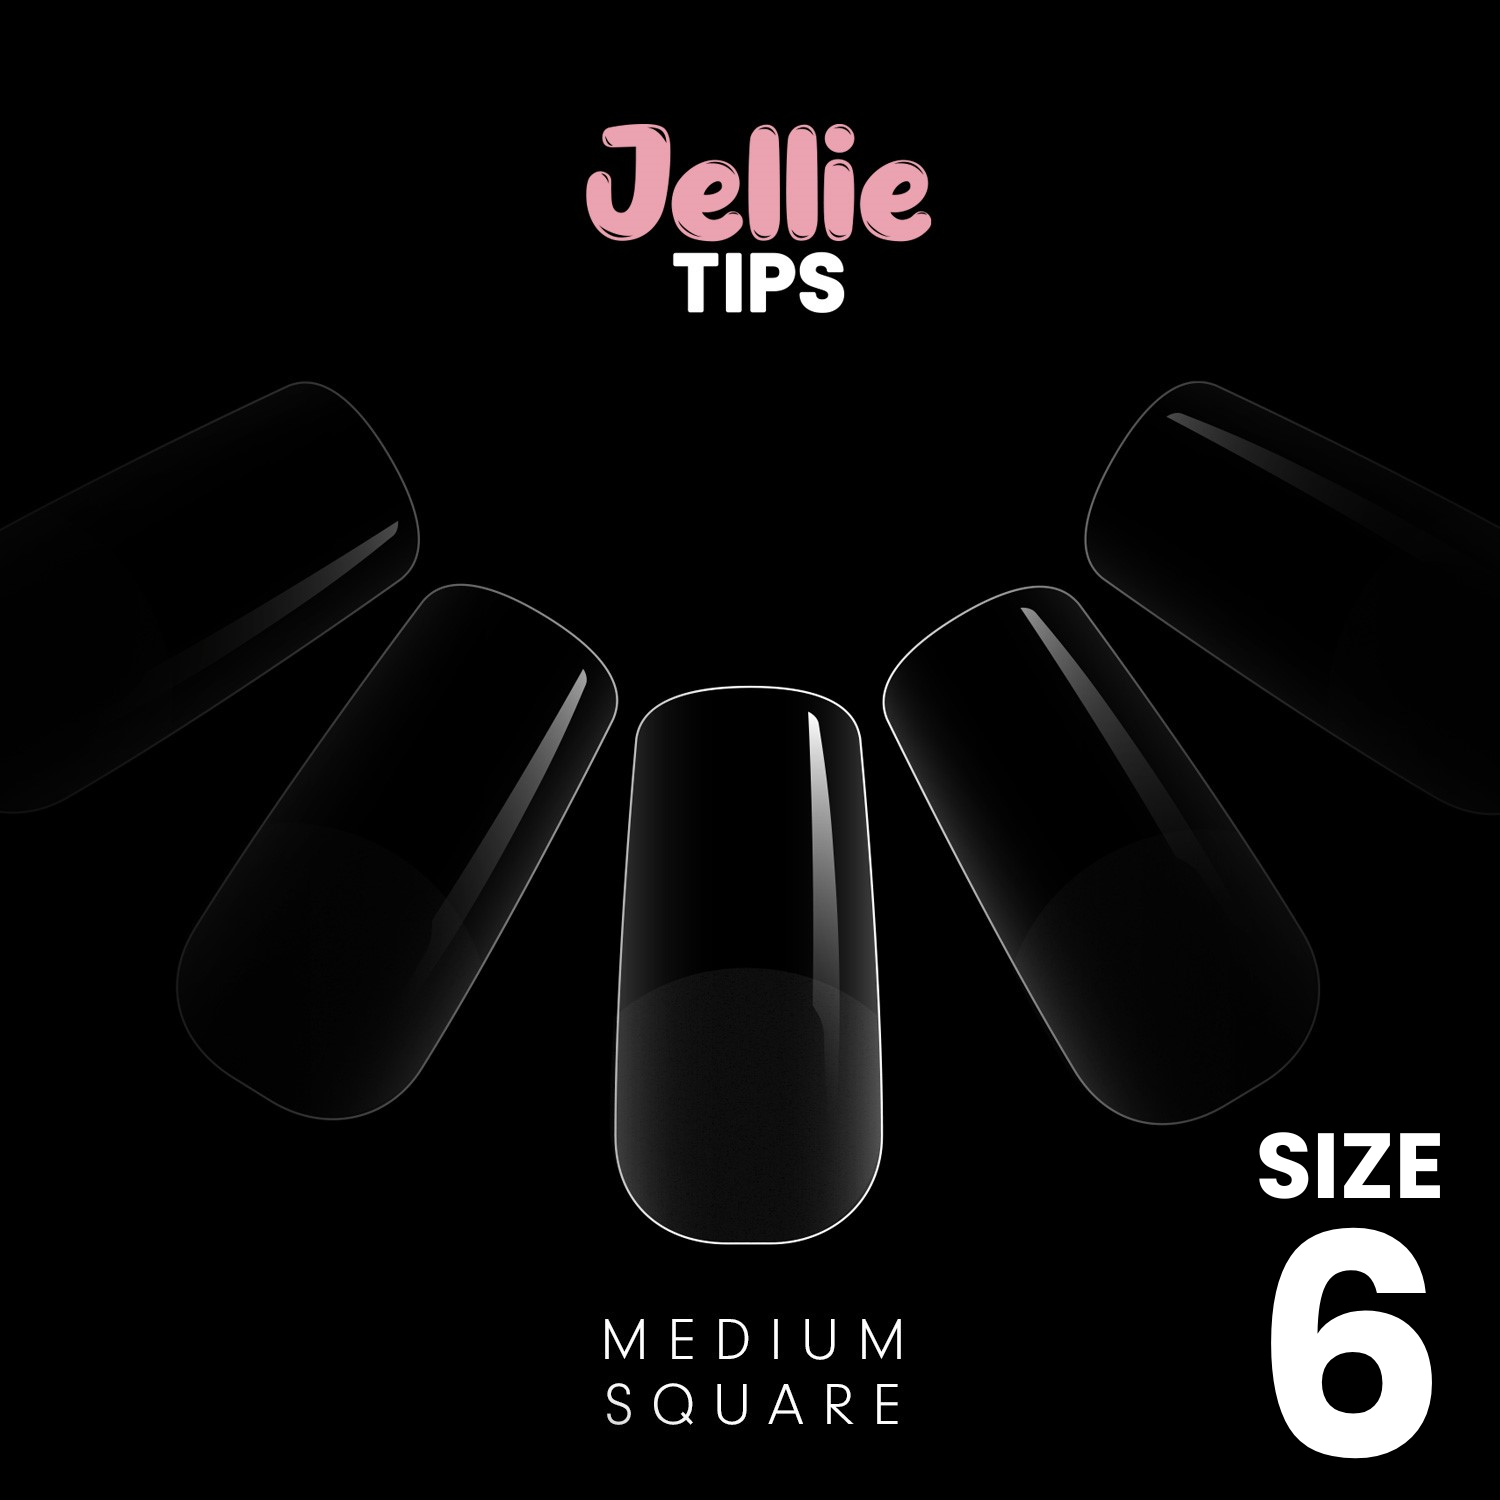 Halo Jellie Nail Tips Medium Square, Sizes 6, 50 One Size